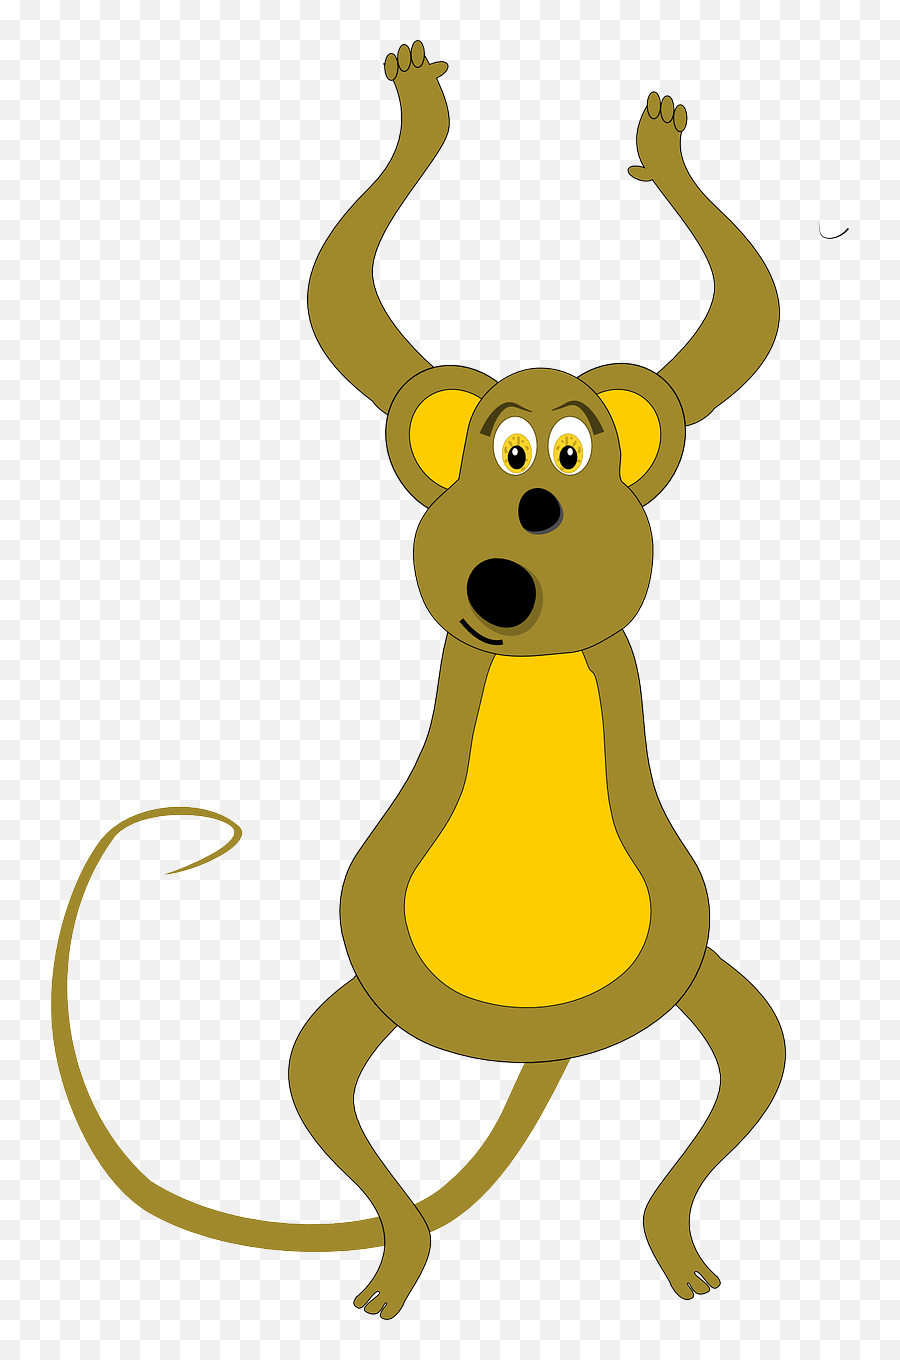 Jumping Monkey Clip Art At Clkercom - Vector Clip Art Long Division Dangerous Monkey Emoji,Jumping Clipart